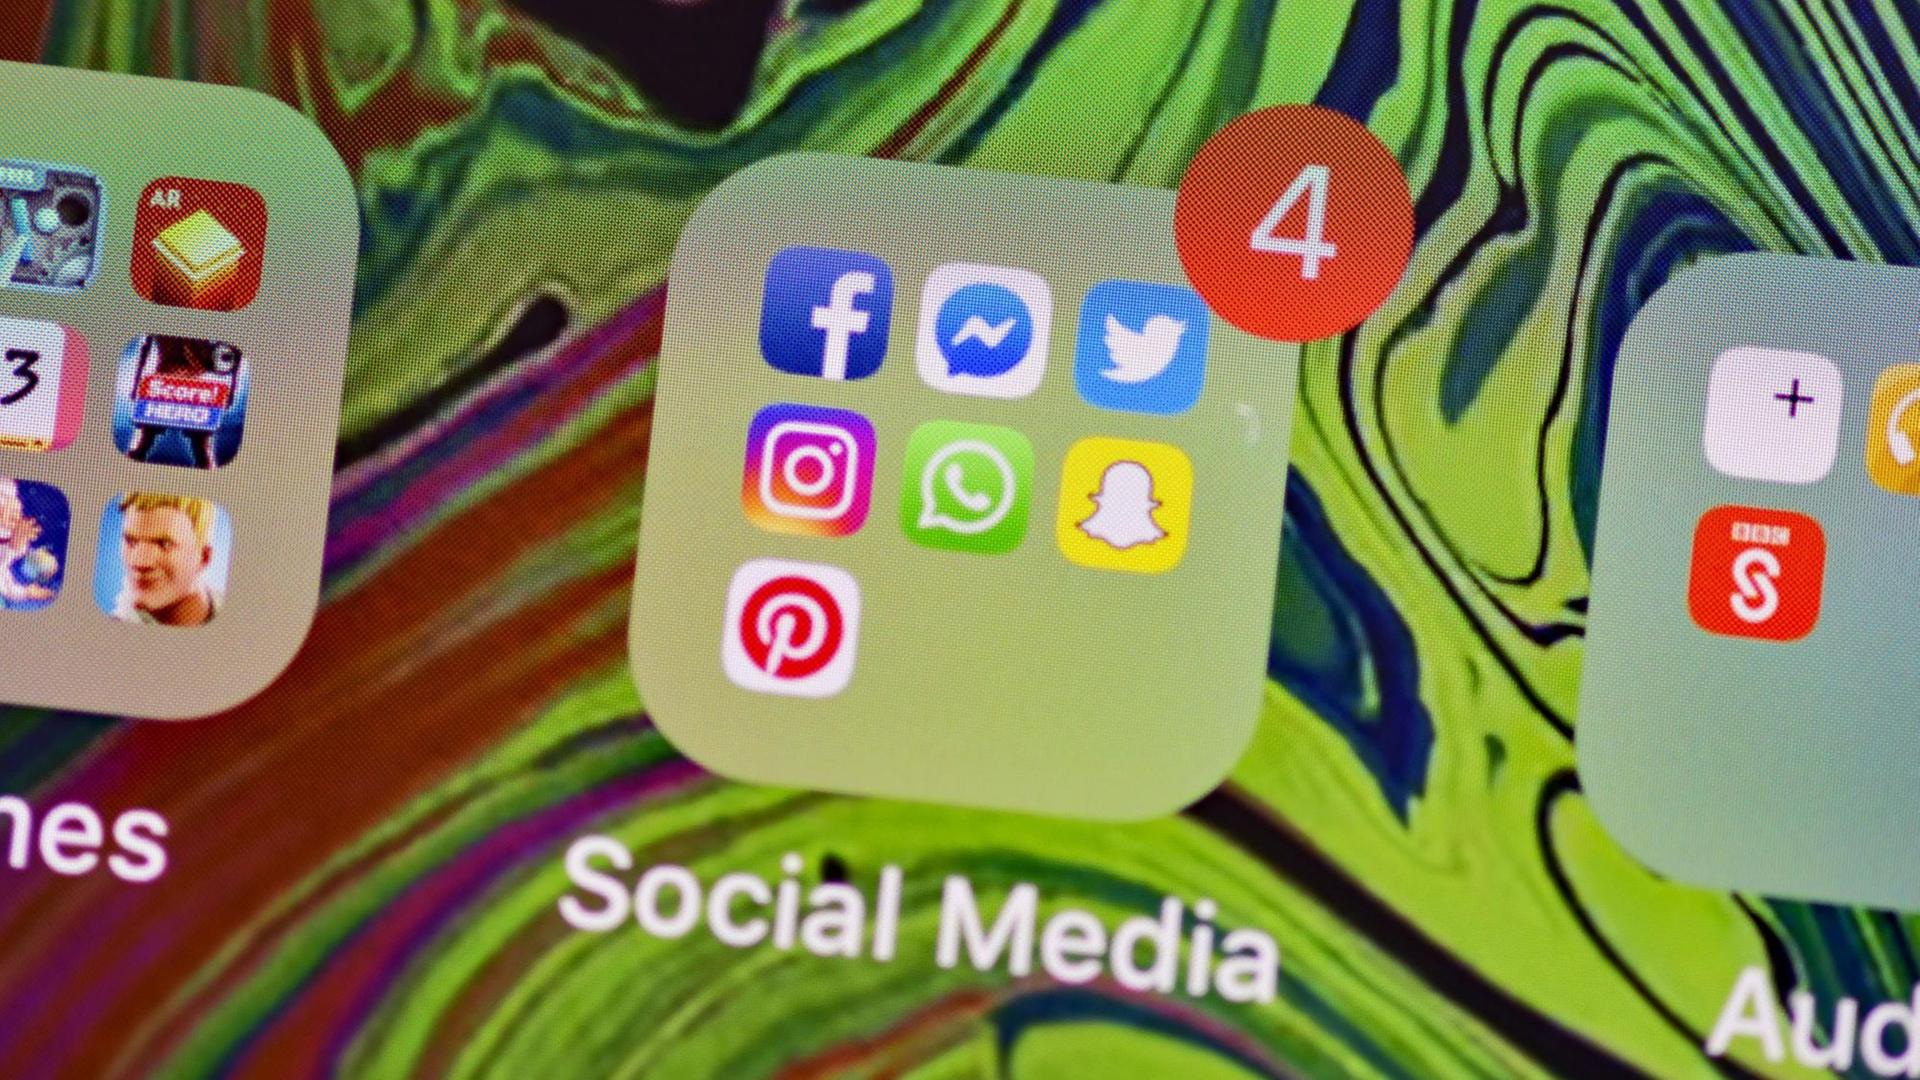 Display eines Mobilgerätes mit den Logos der Social-Media-Apps Facebook, Messenger, Twitter, Instagram, WhatsApp, Snapchat and Pinterest.